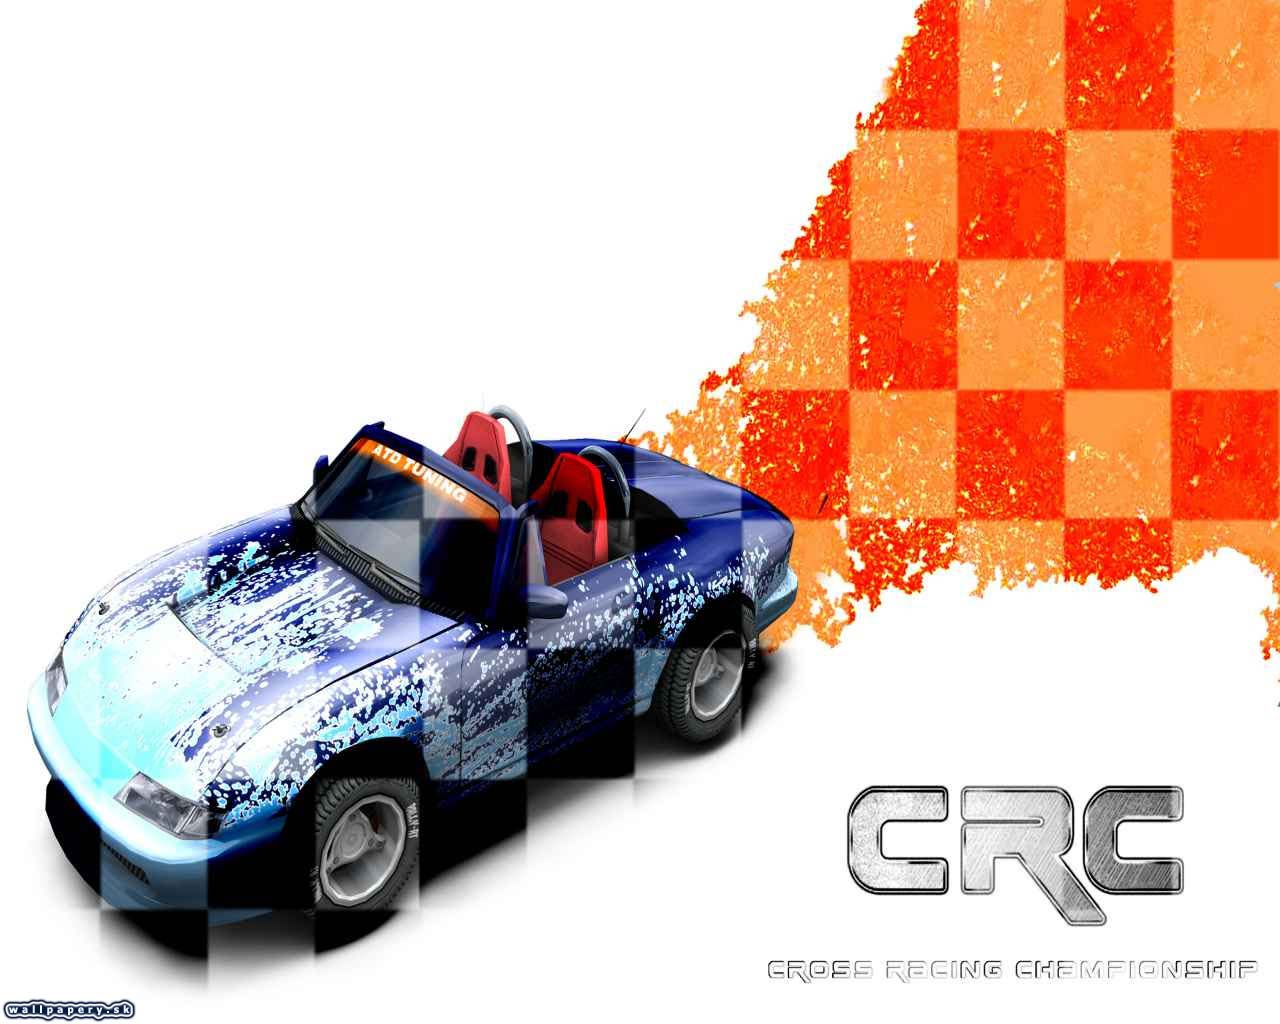 Cross Racing Championship 2005 - wallpaper 5